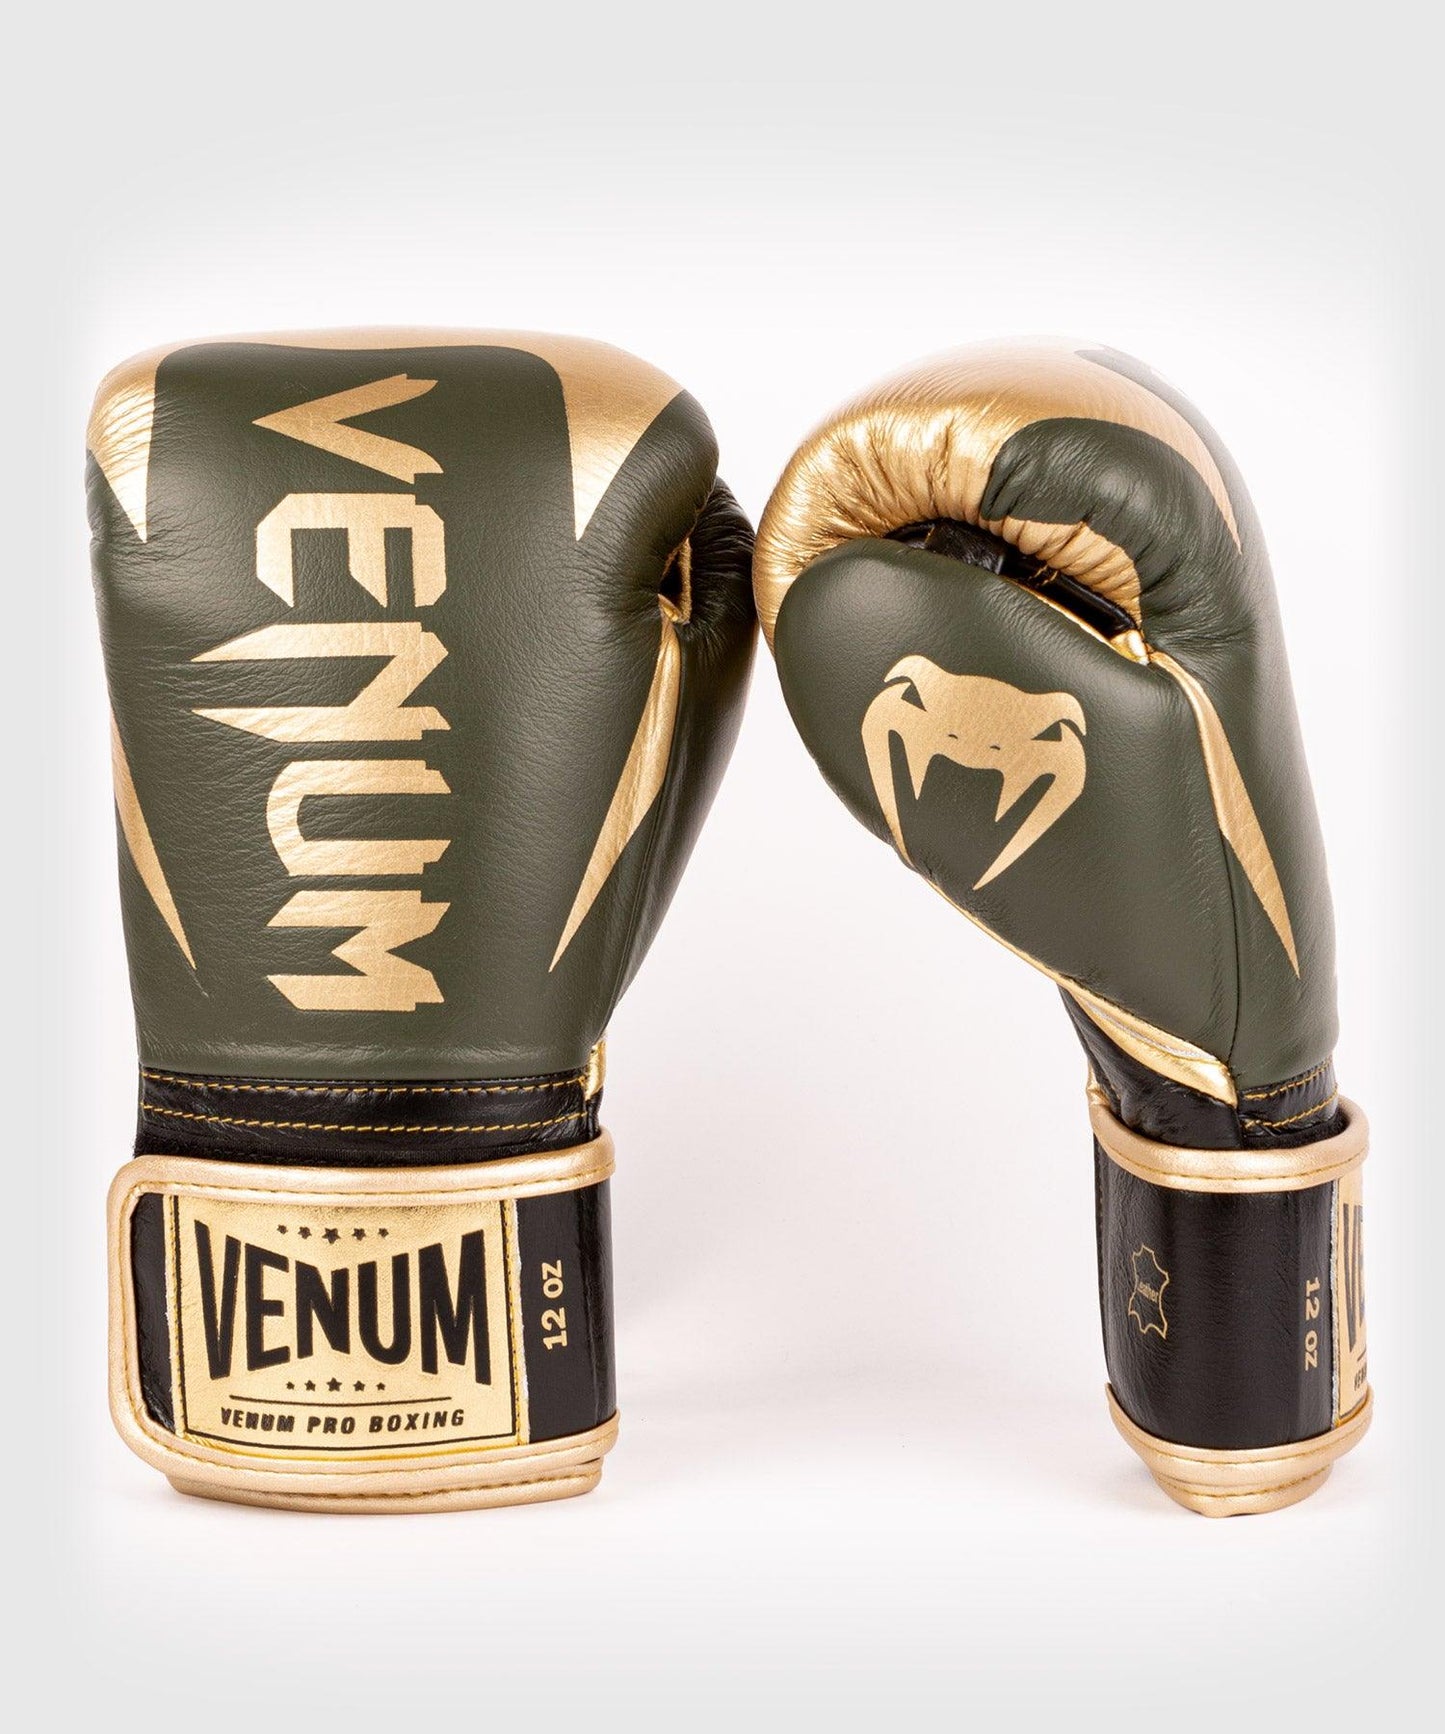 Venum Hammer Pro Boxing Gloves Velcro - Khaki/Gold Picture 1